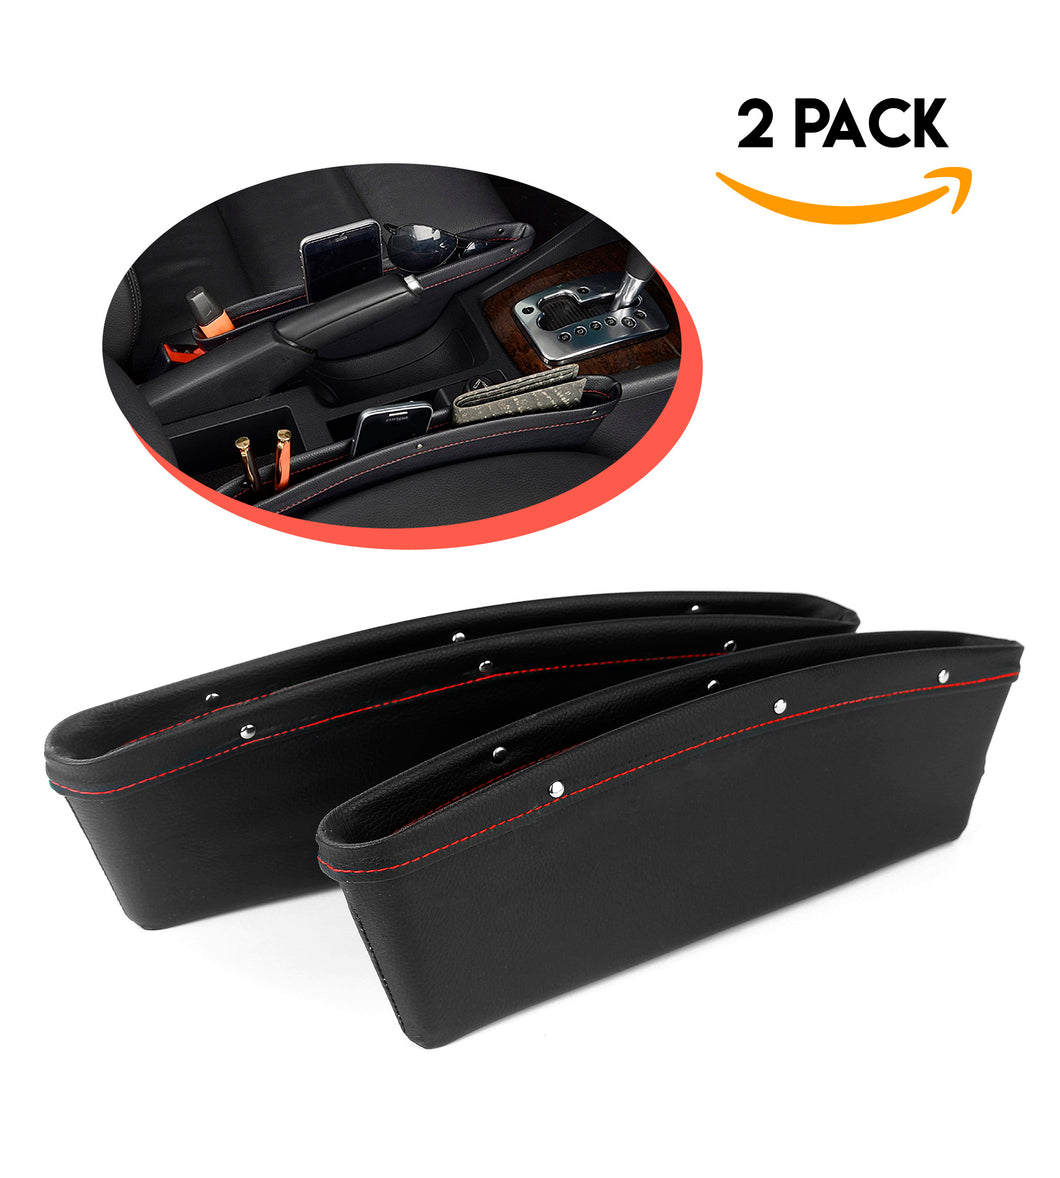 Premium PU Leather Seat Gap Filler & Car Organizer by Boxiki Travel - Boxiki Travel